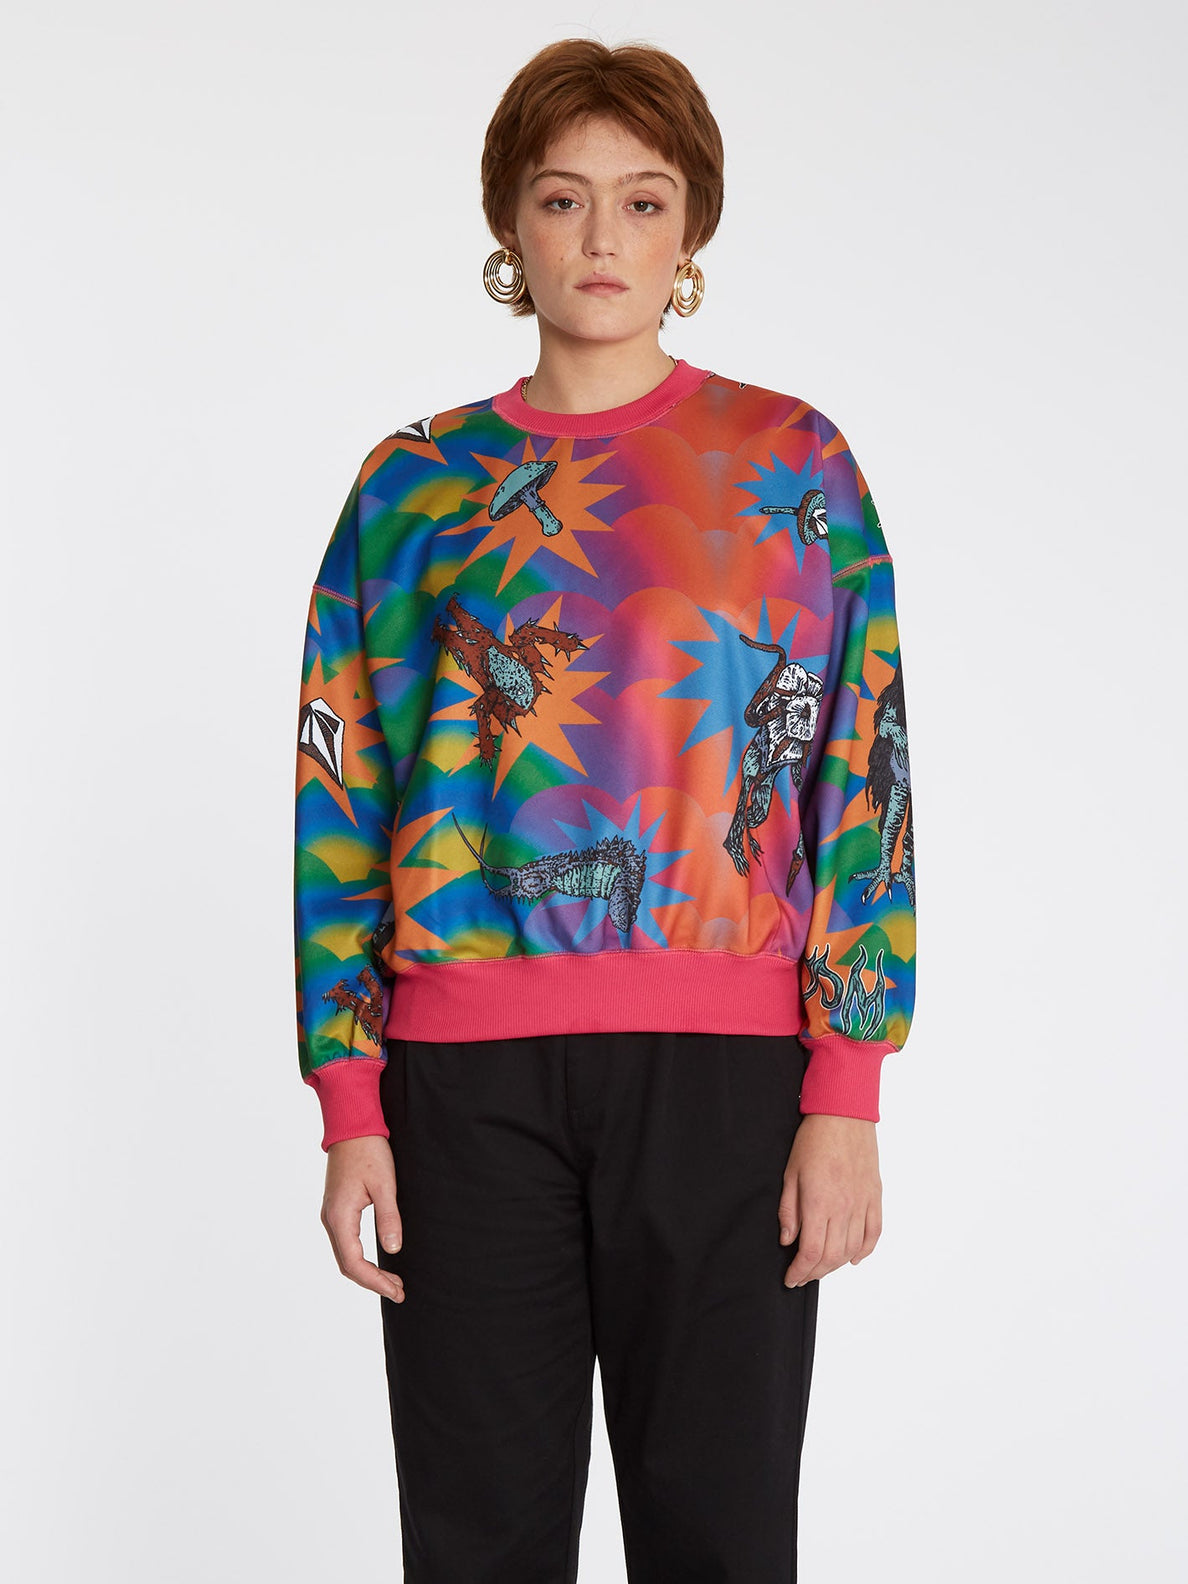 Chrissie Abbott X French Sweatshirt - MULTI (B4632204_MLT) [F]